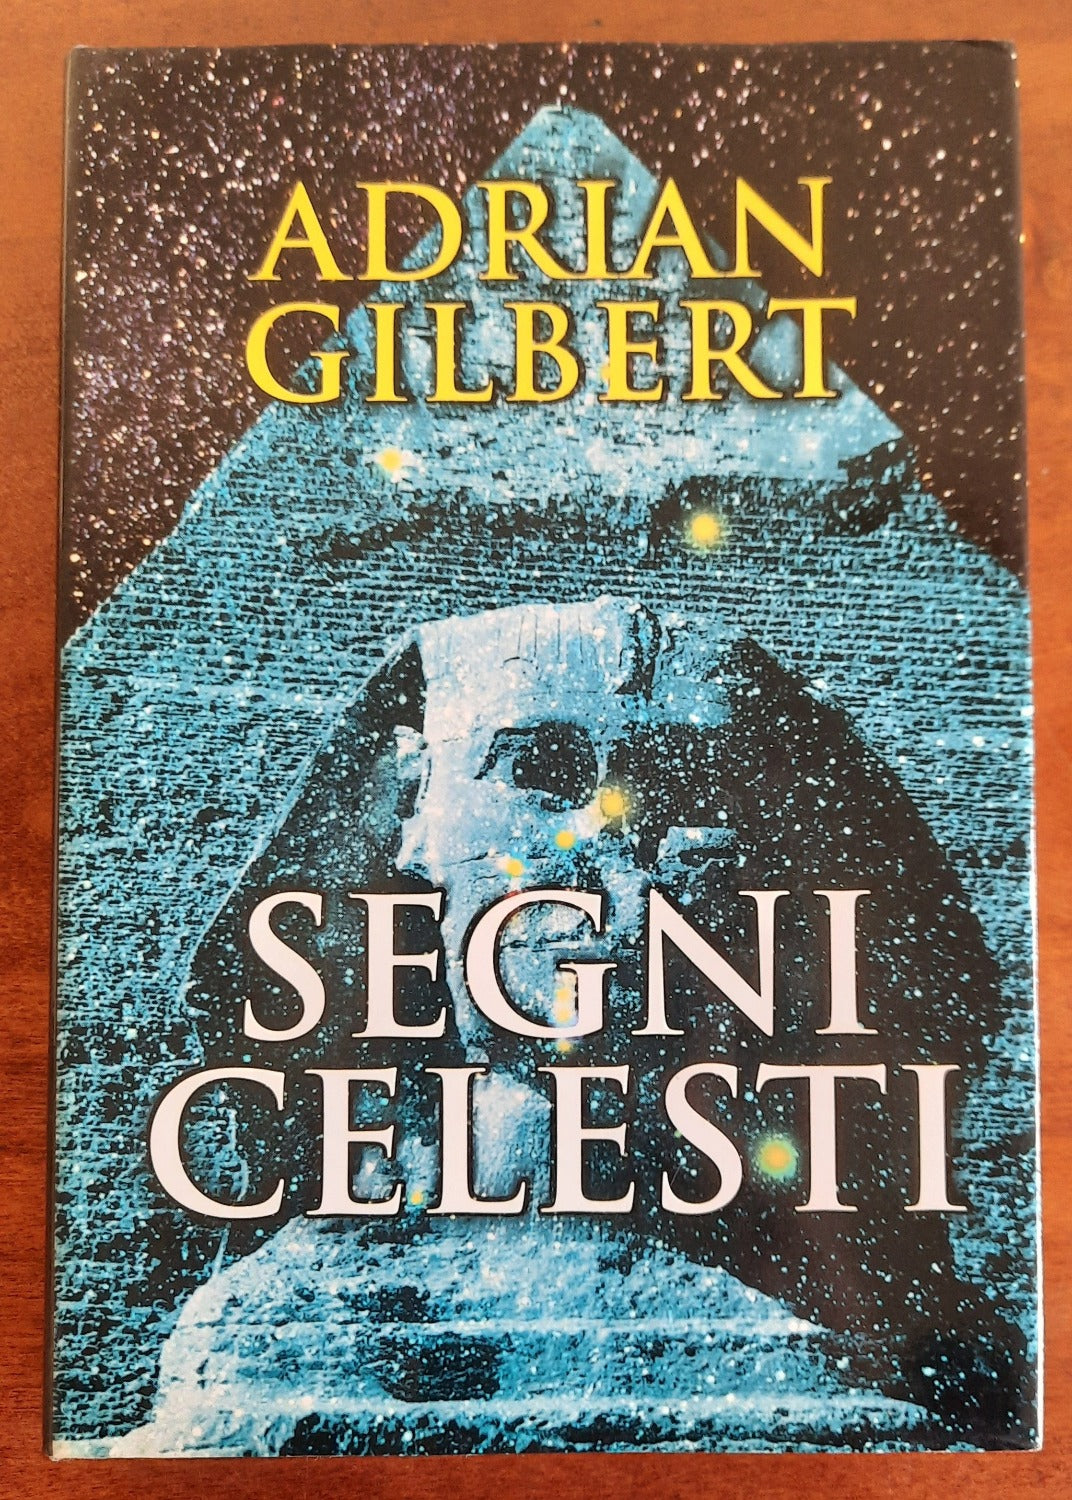 Segni celesti - Mondolibri - 2003